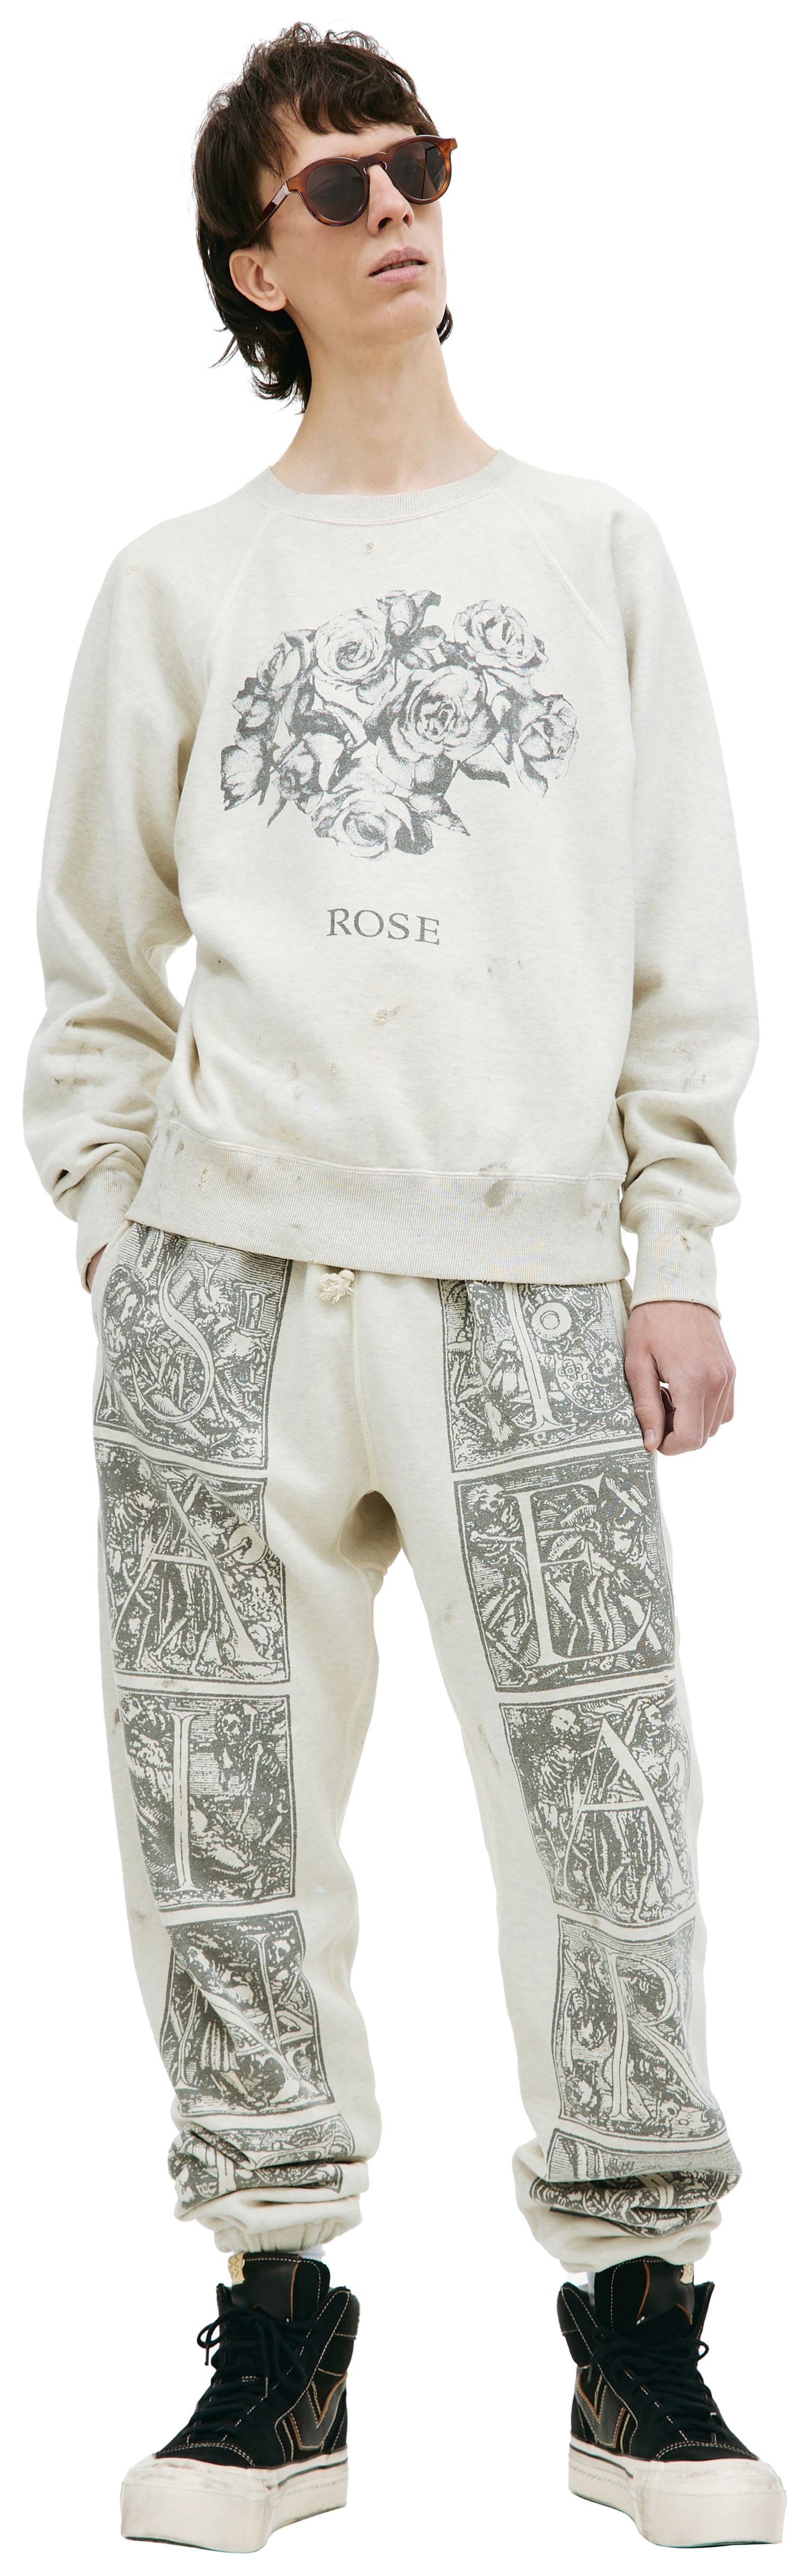 Saint Michael Rose printed sweatshirt